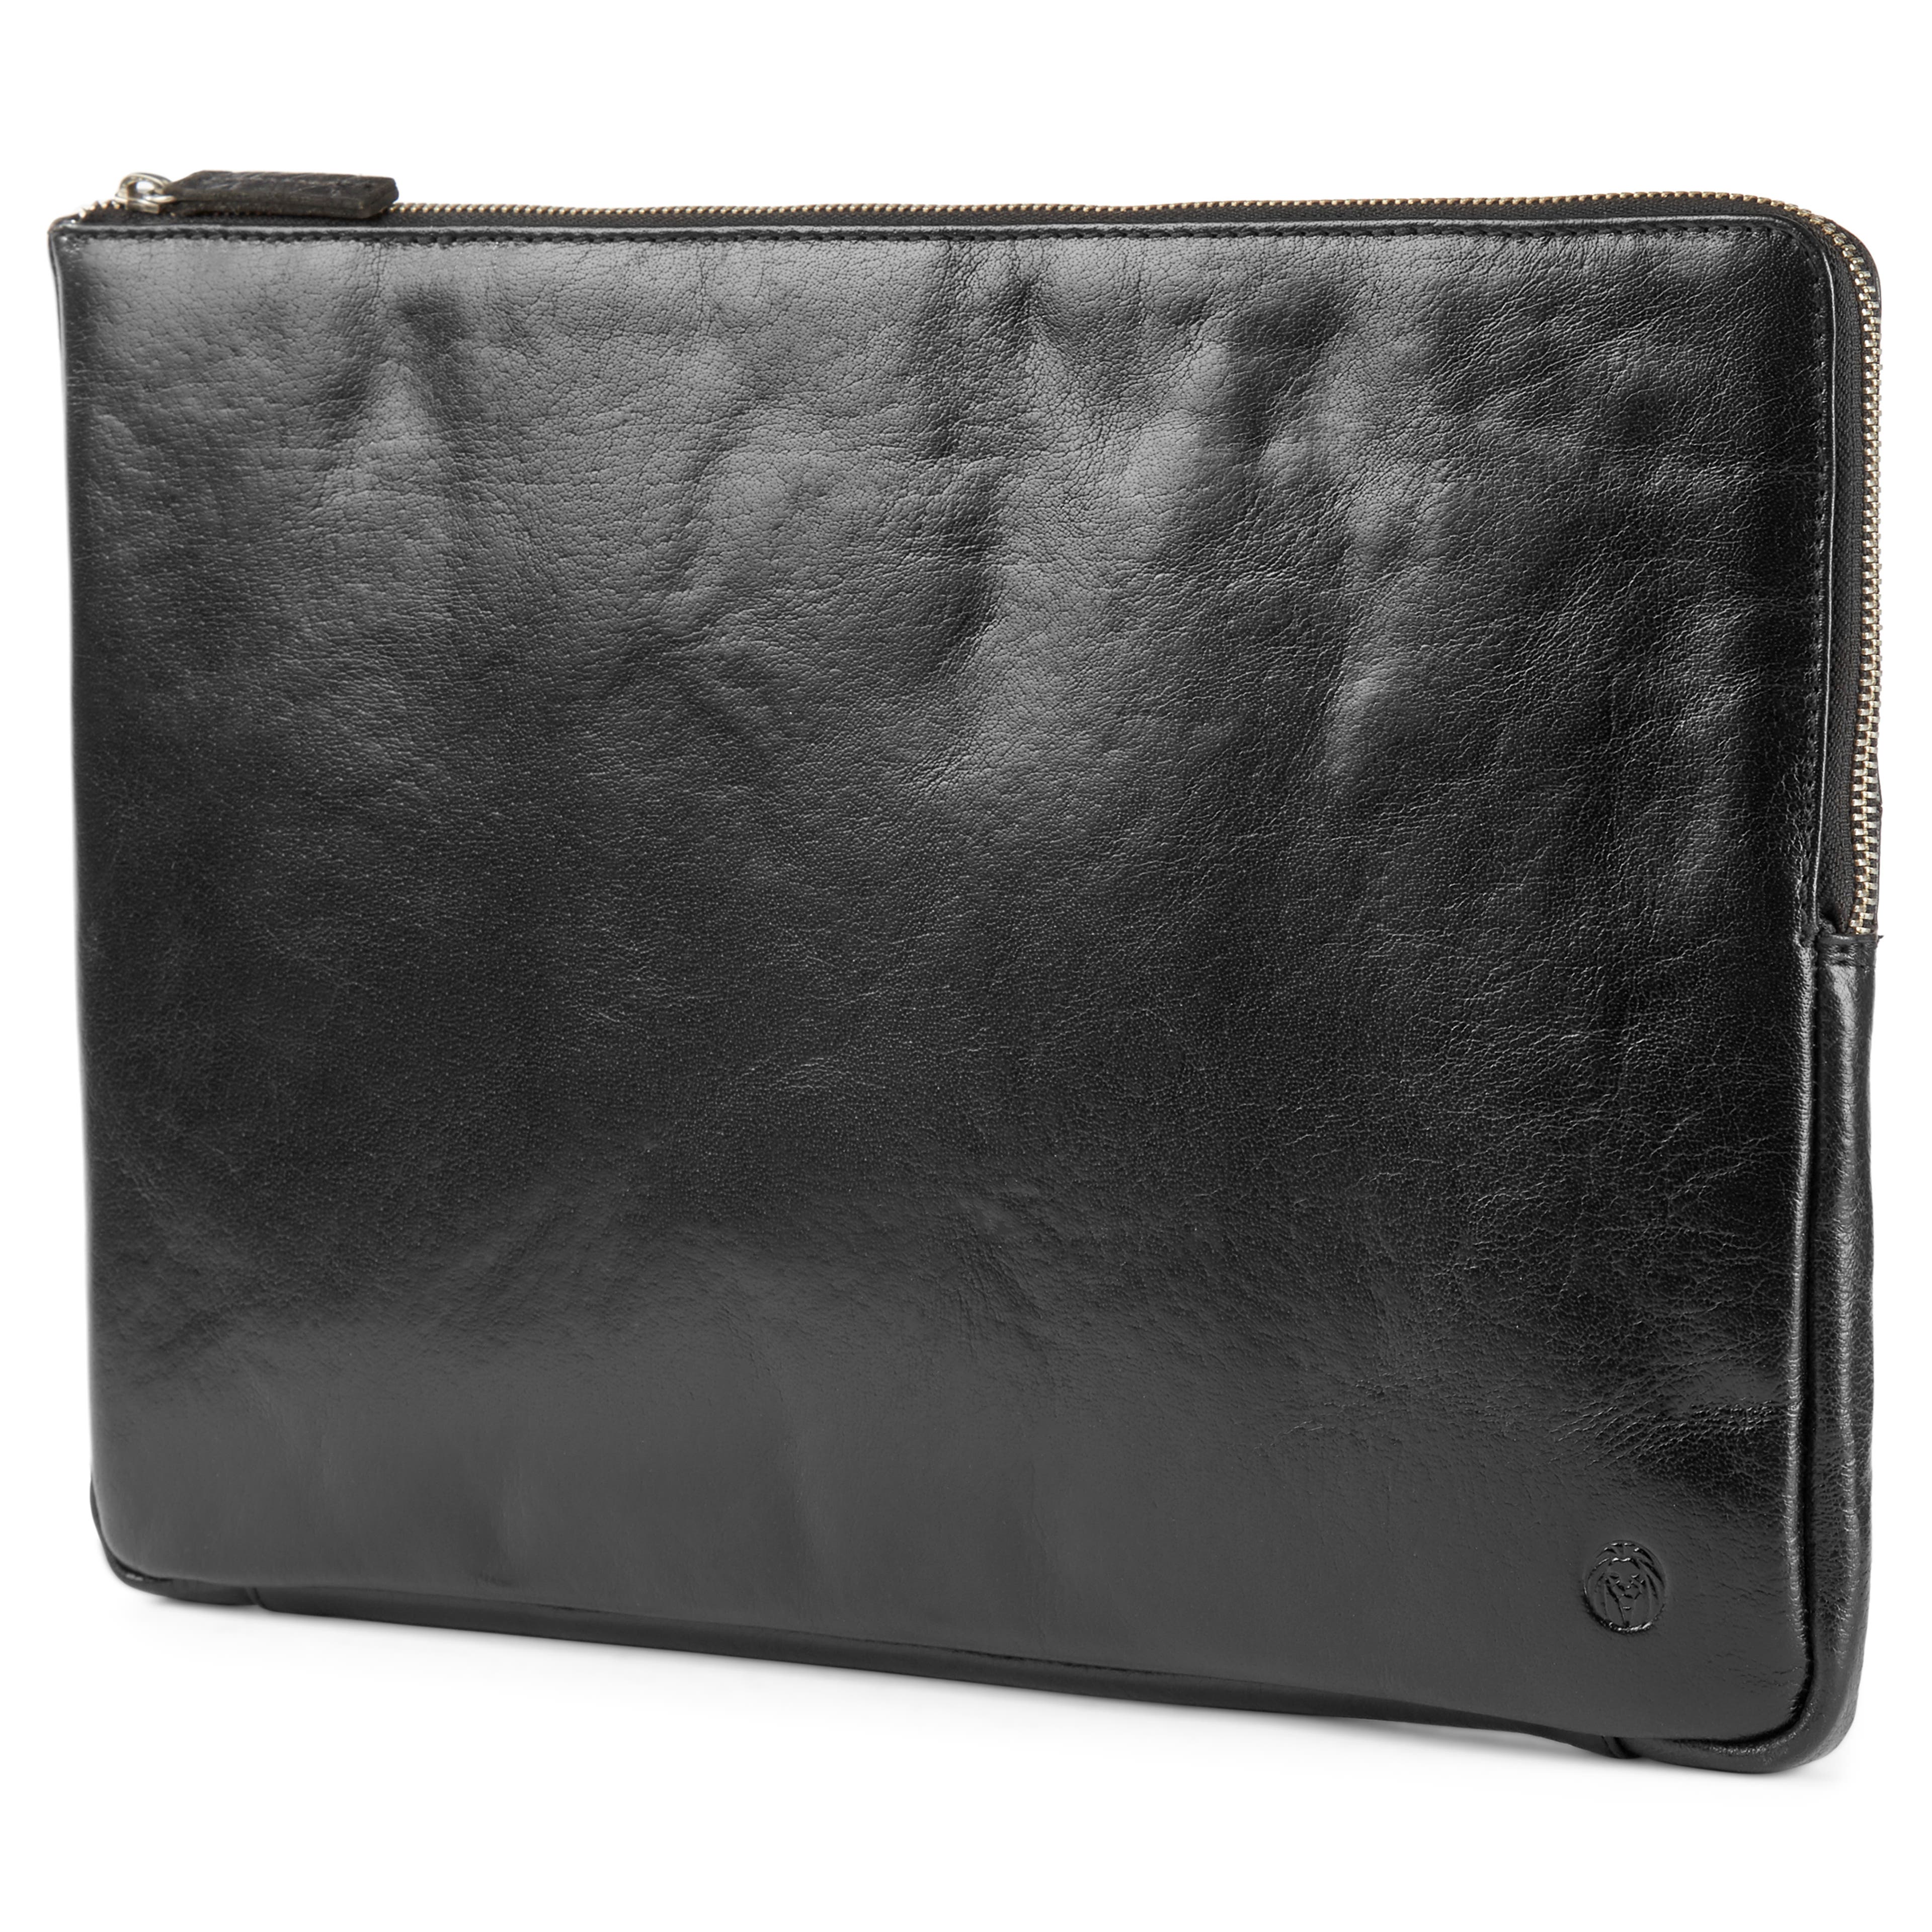 California | Small Black Leather Laptop Sleeve